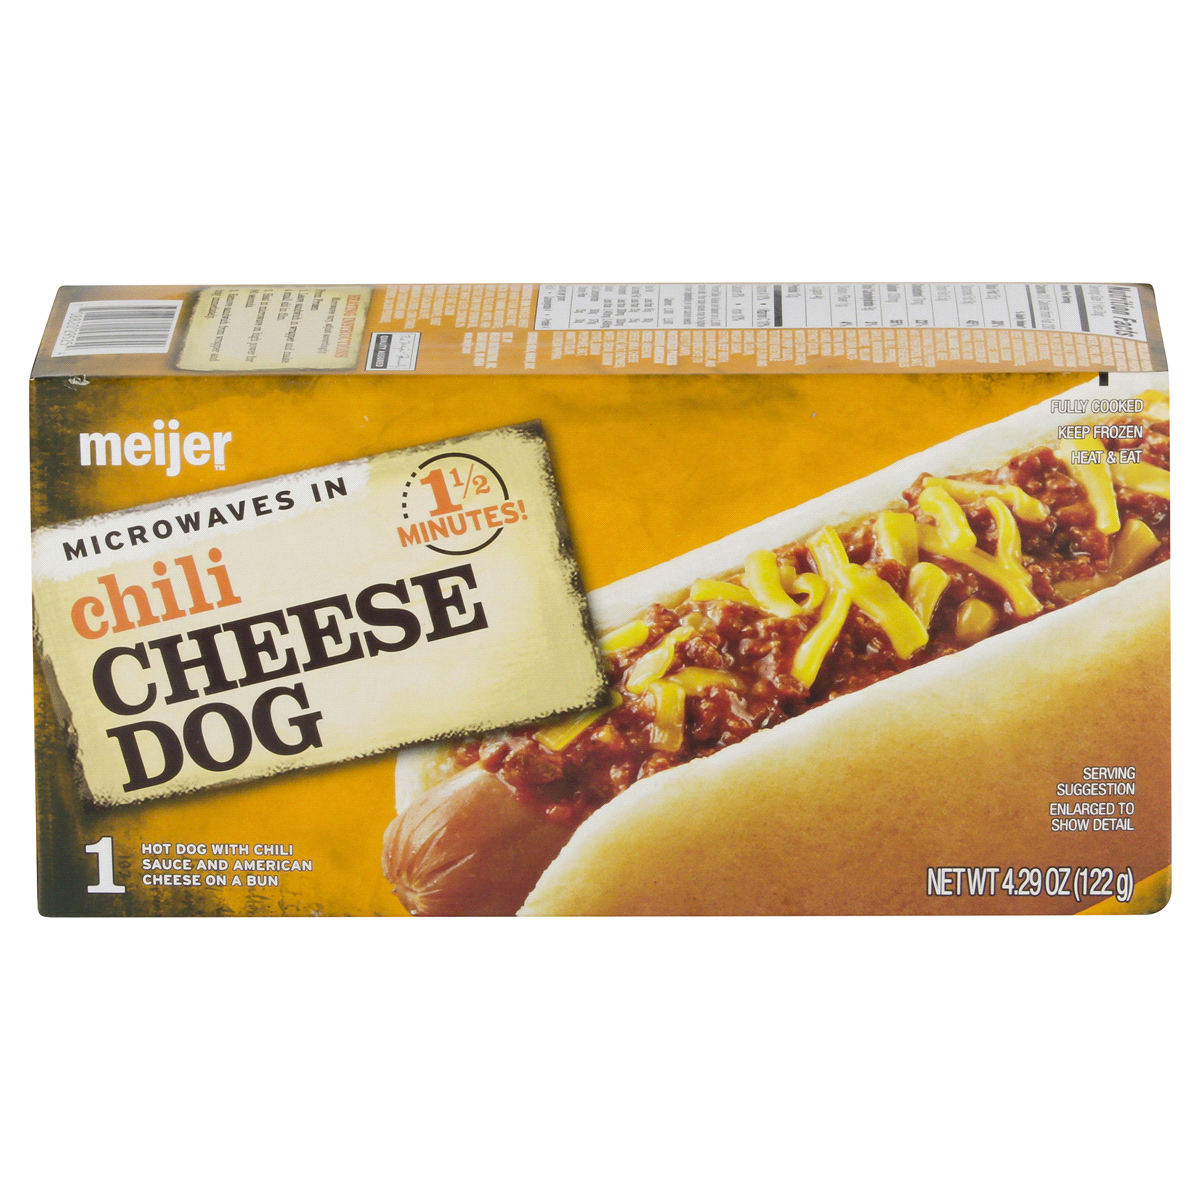 slide 5 of 5, MEIJER Chili Cheese Dog, 4.29 oz